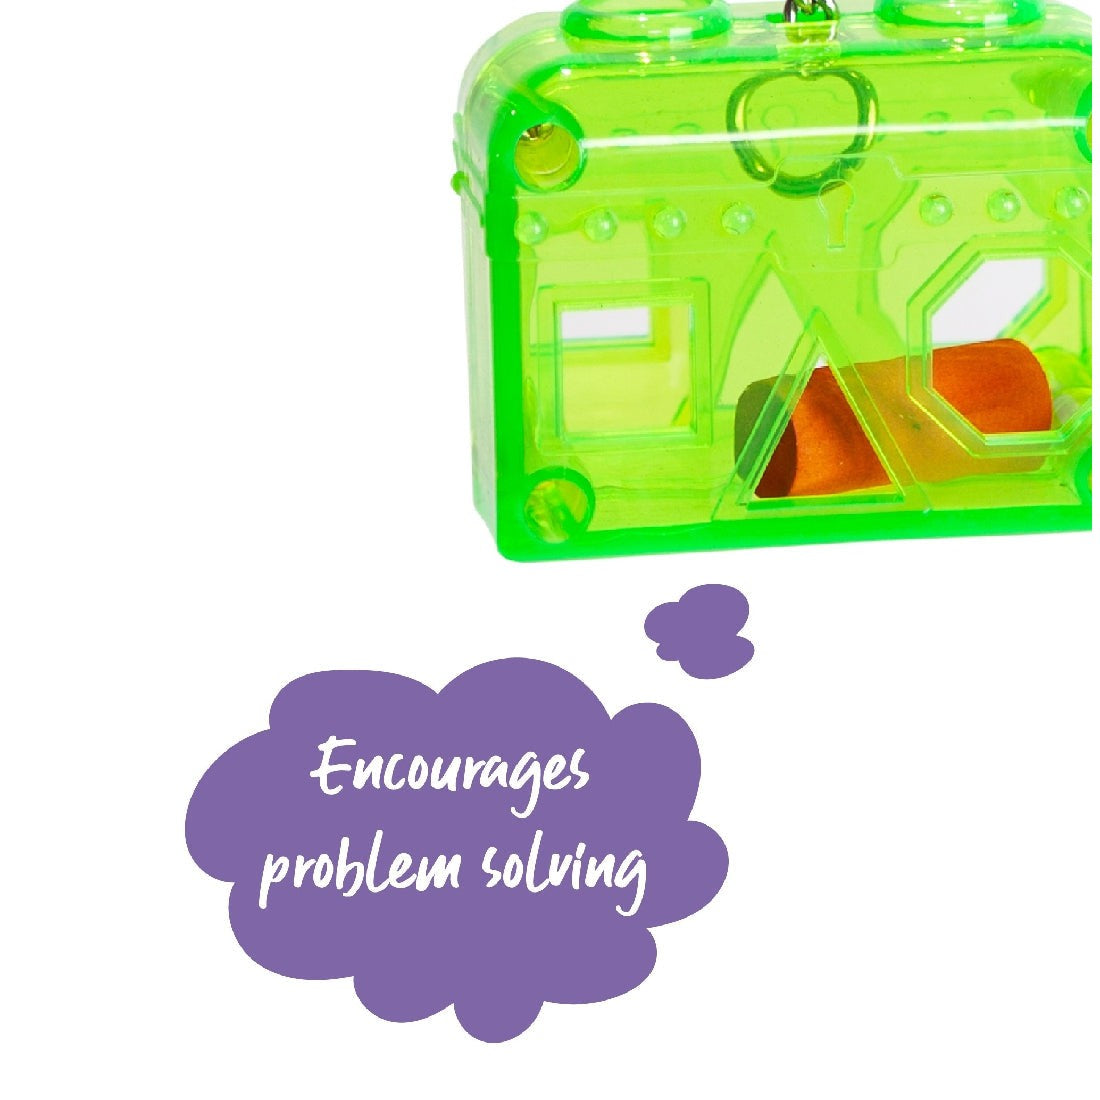 Transparent green bird toy with orange treat encourages problem solving.